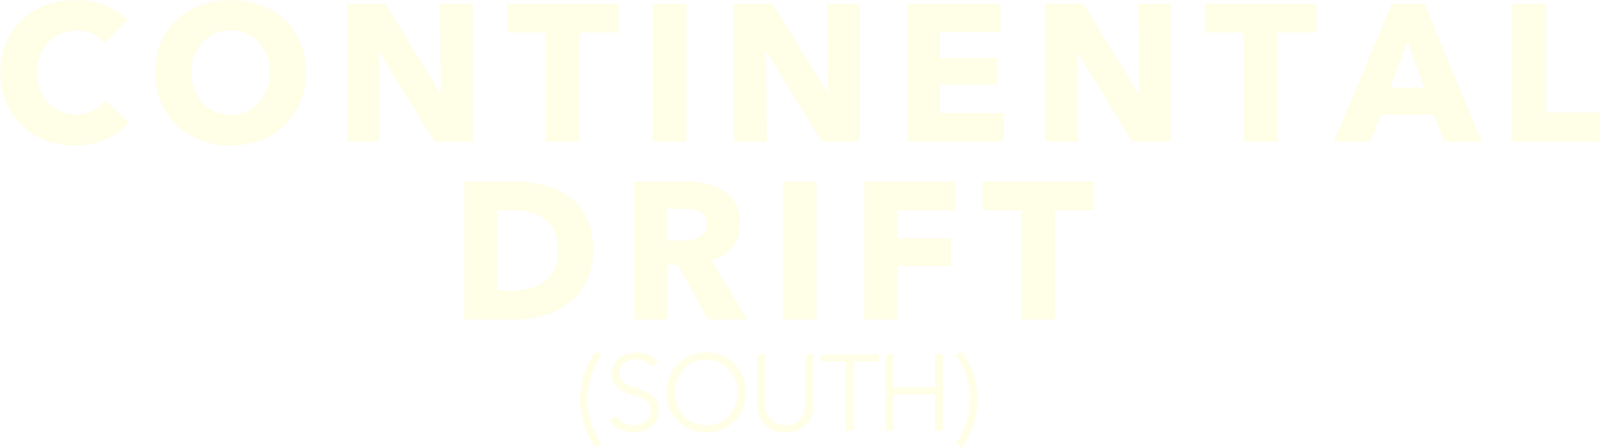 Continental Drift (South)